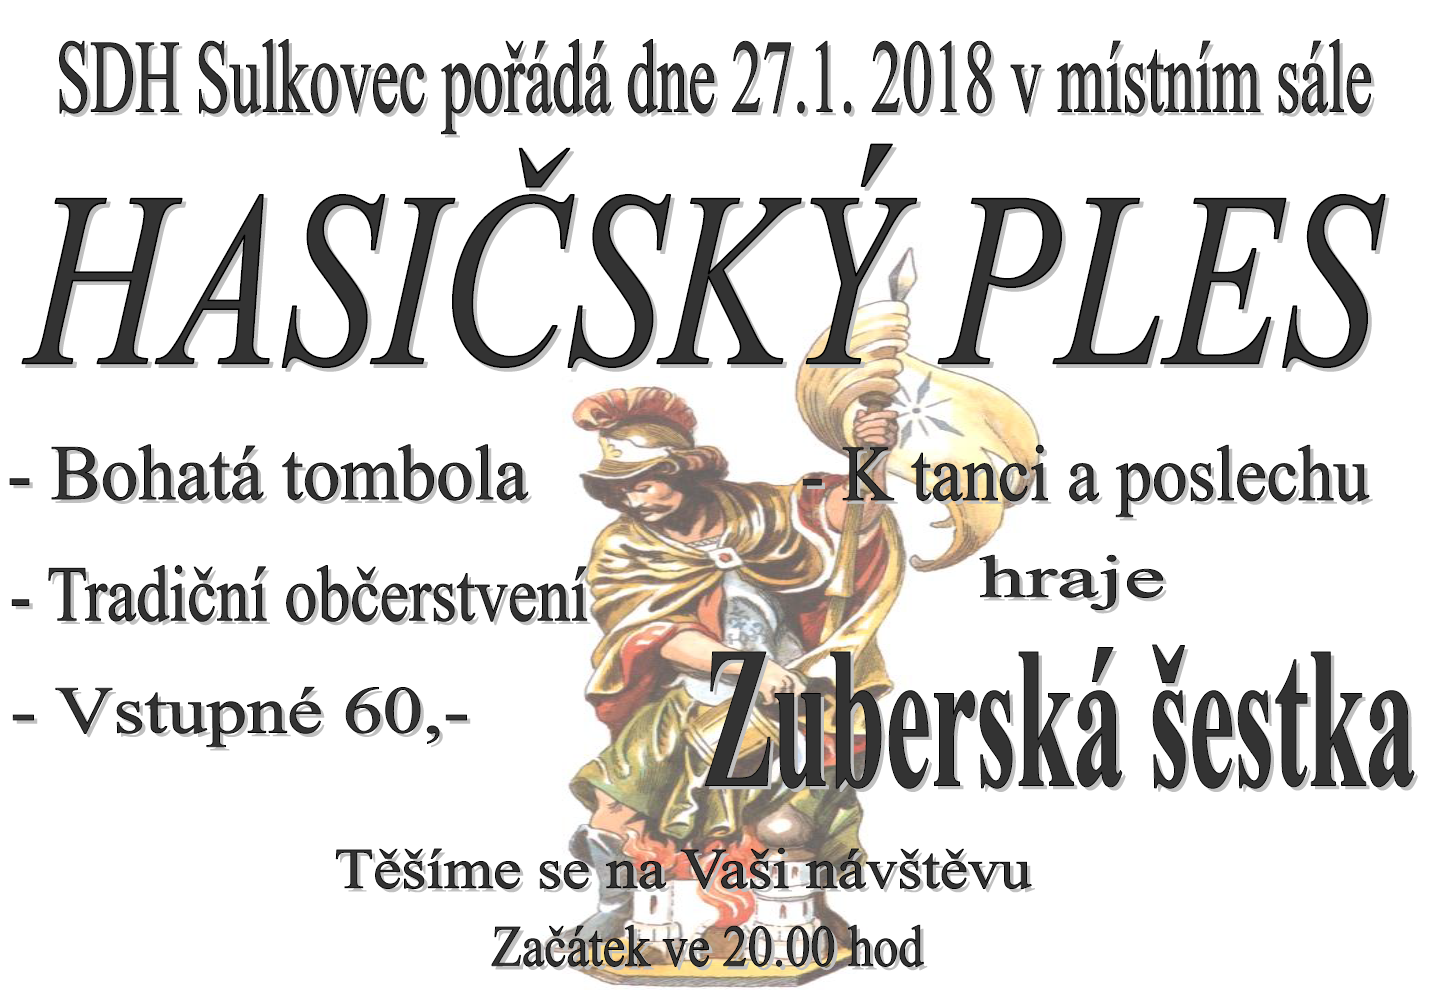 Hasičský ples Sulkovec 2018